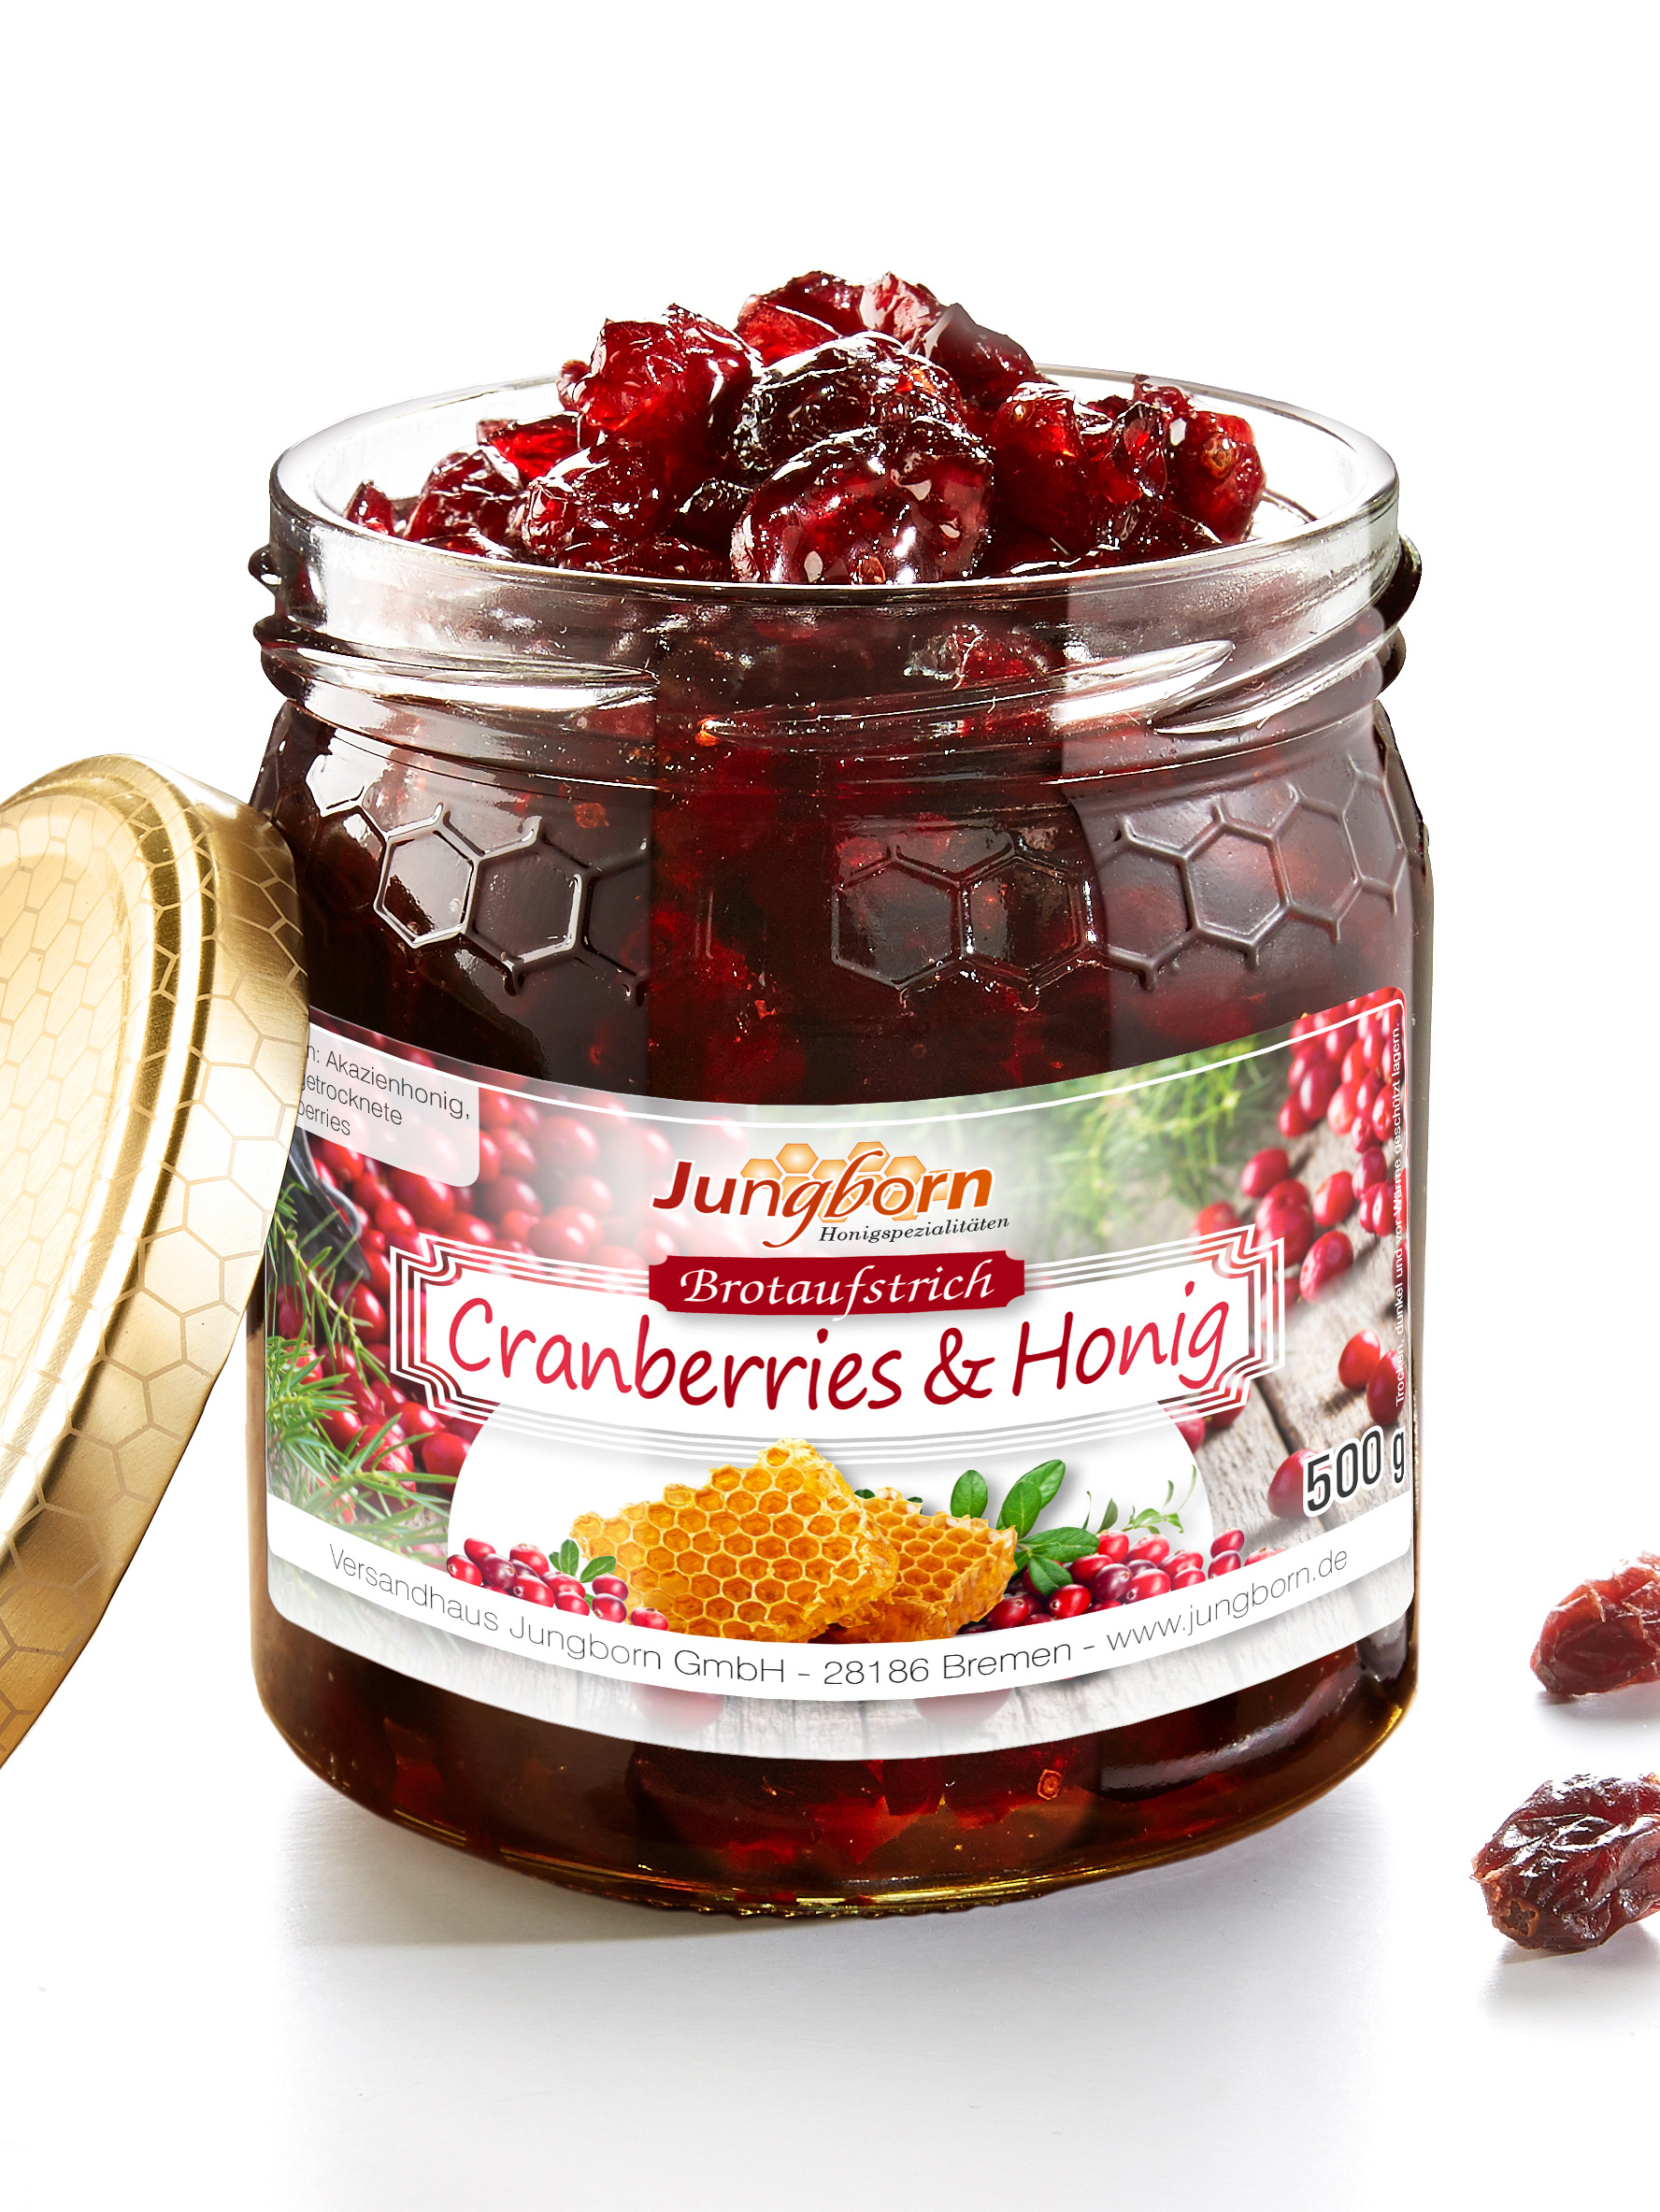 Cranberries & Honig